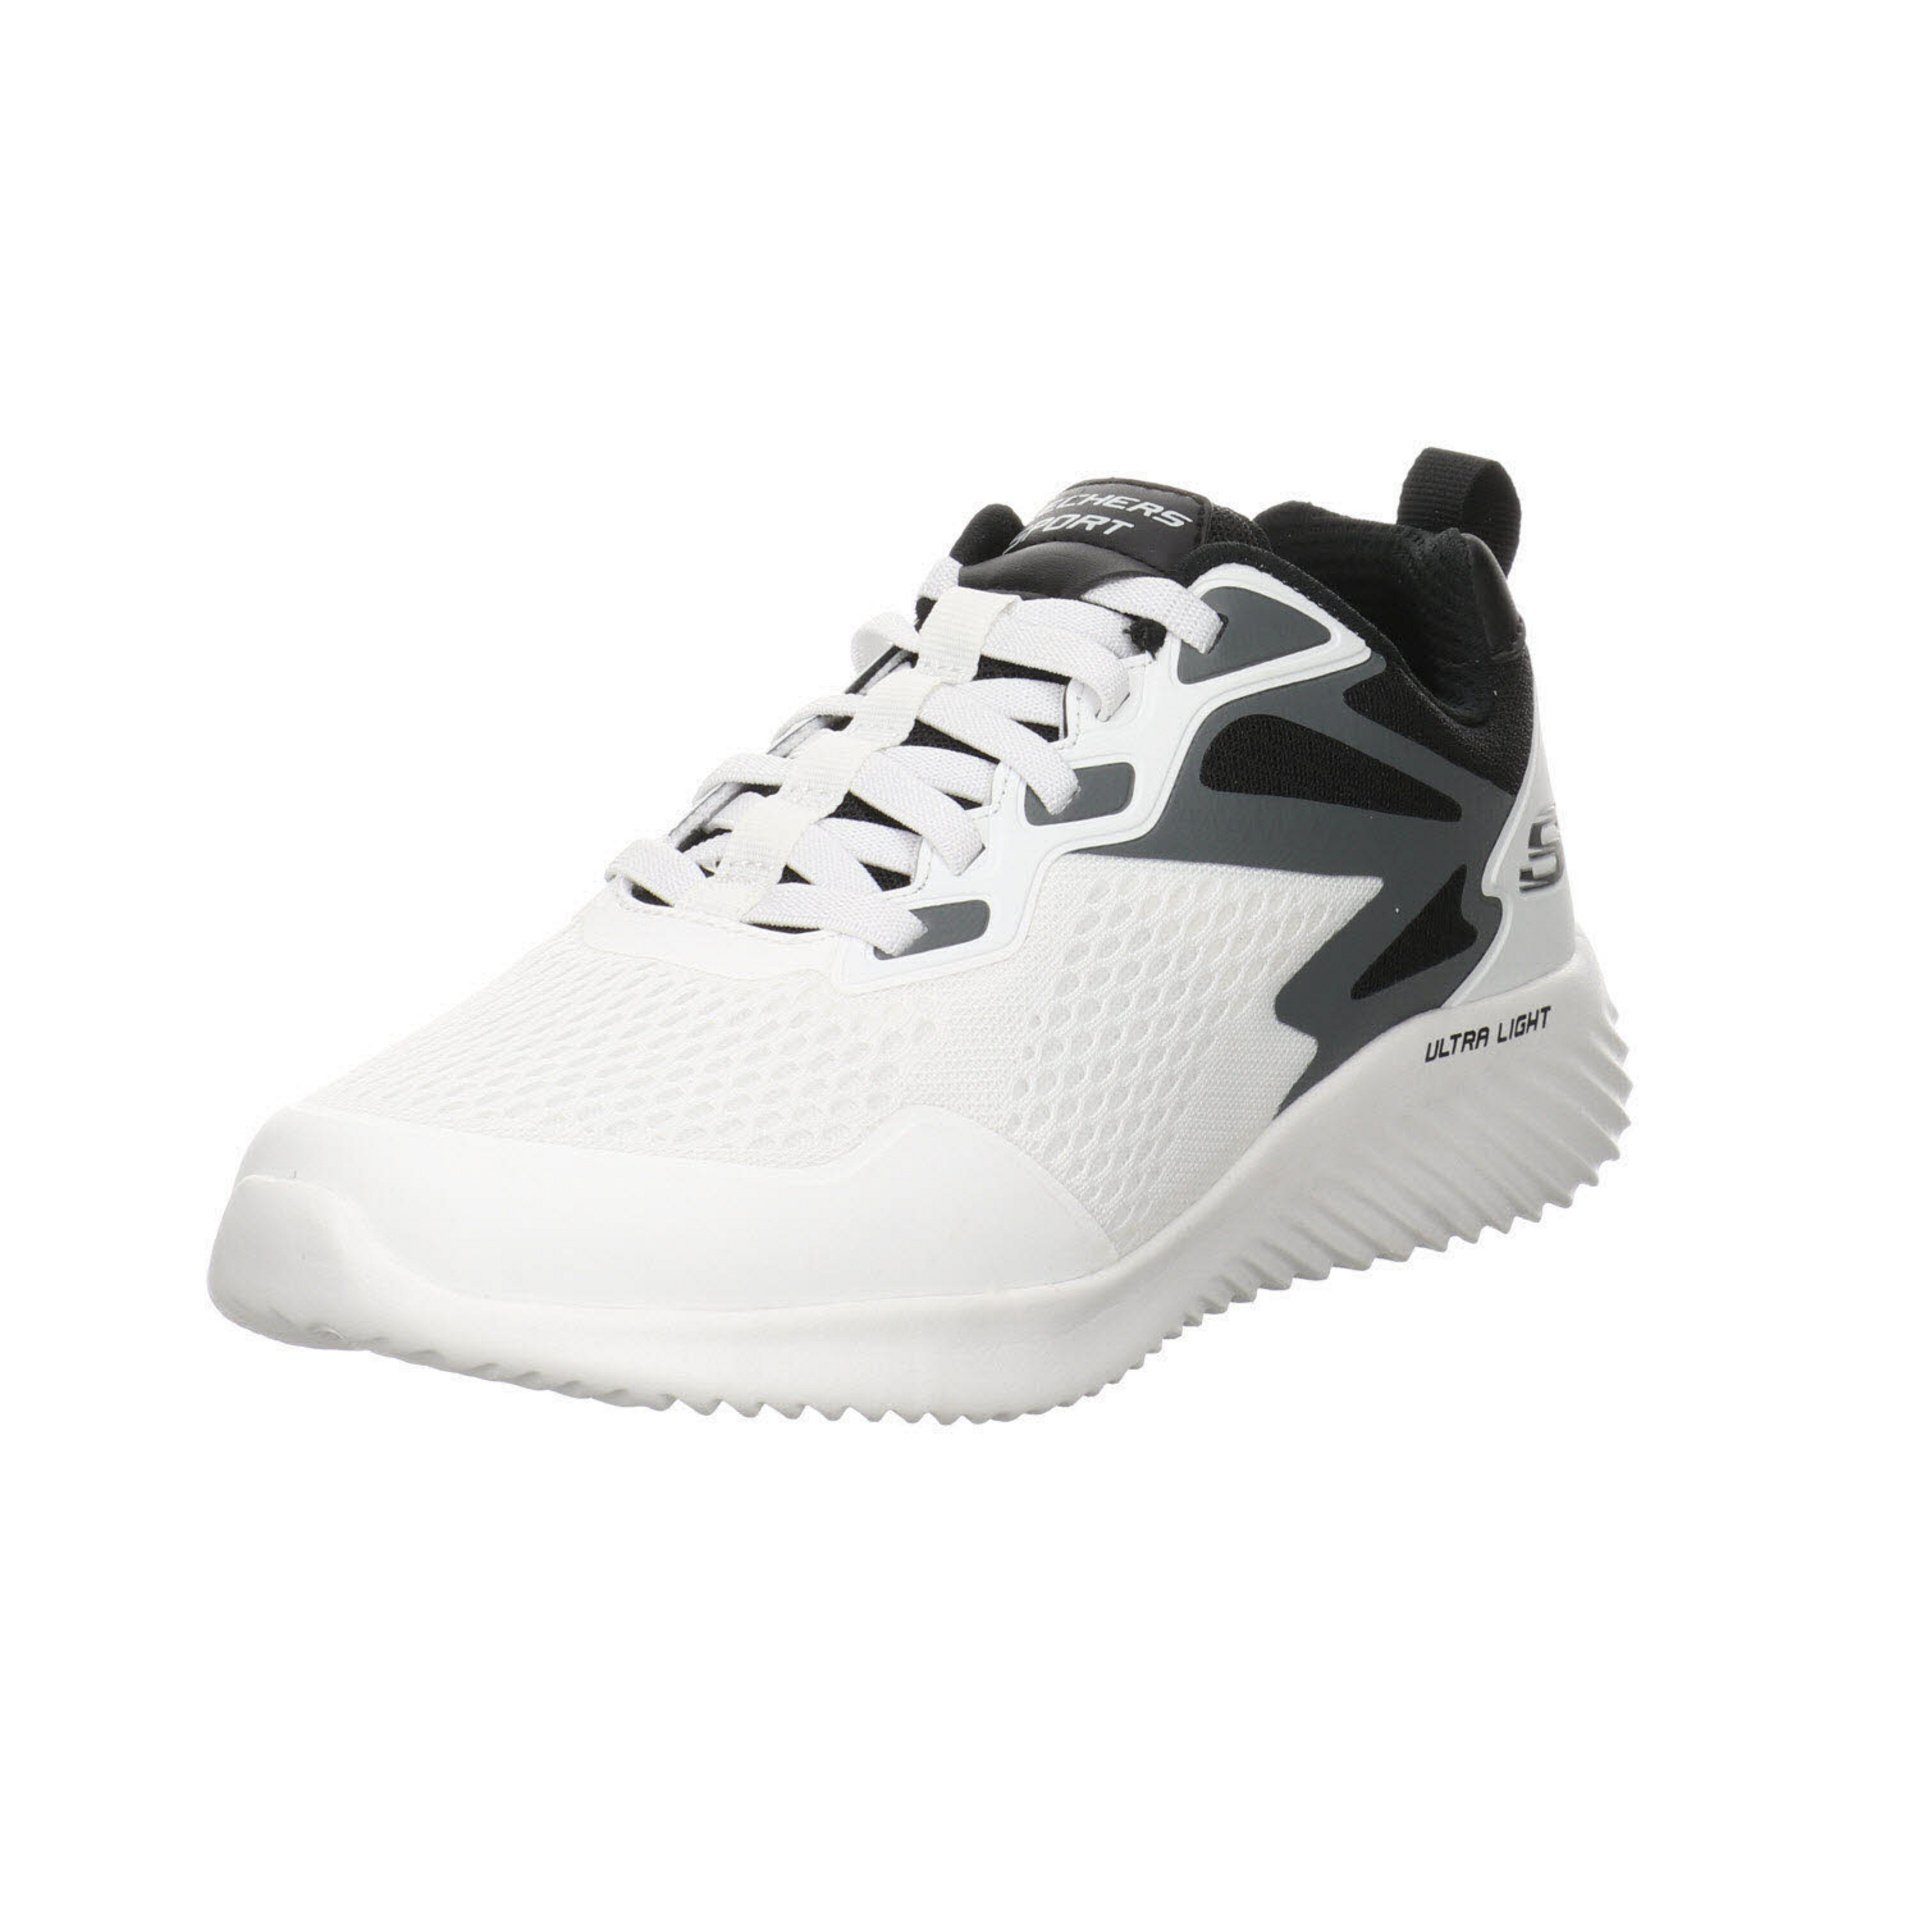 Skechers »Herren Sneaker Schuhe Bounder Sneaker« Sneaker  Synthetikkombination online kaufen | OTTO